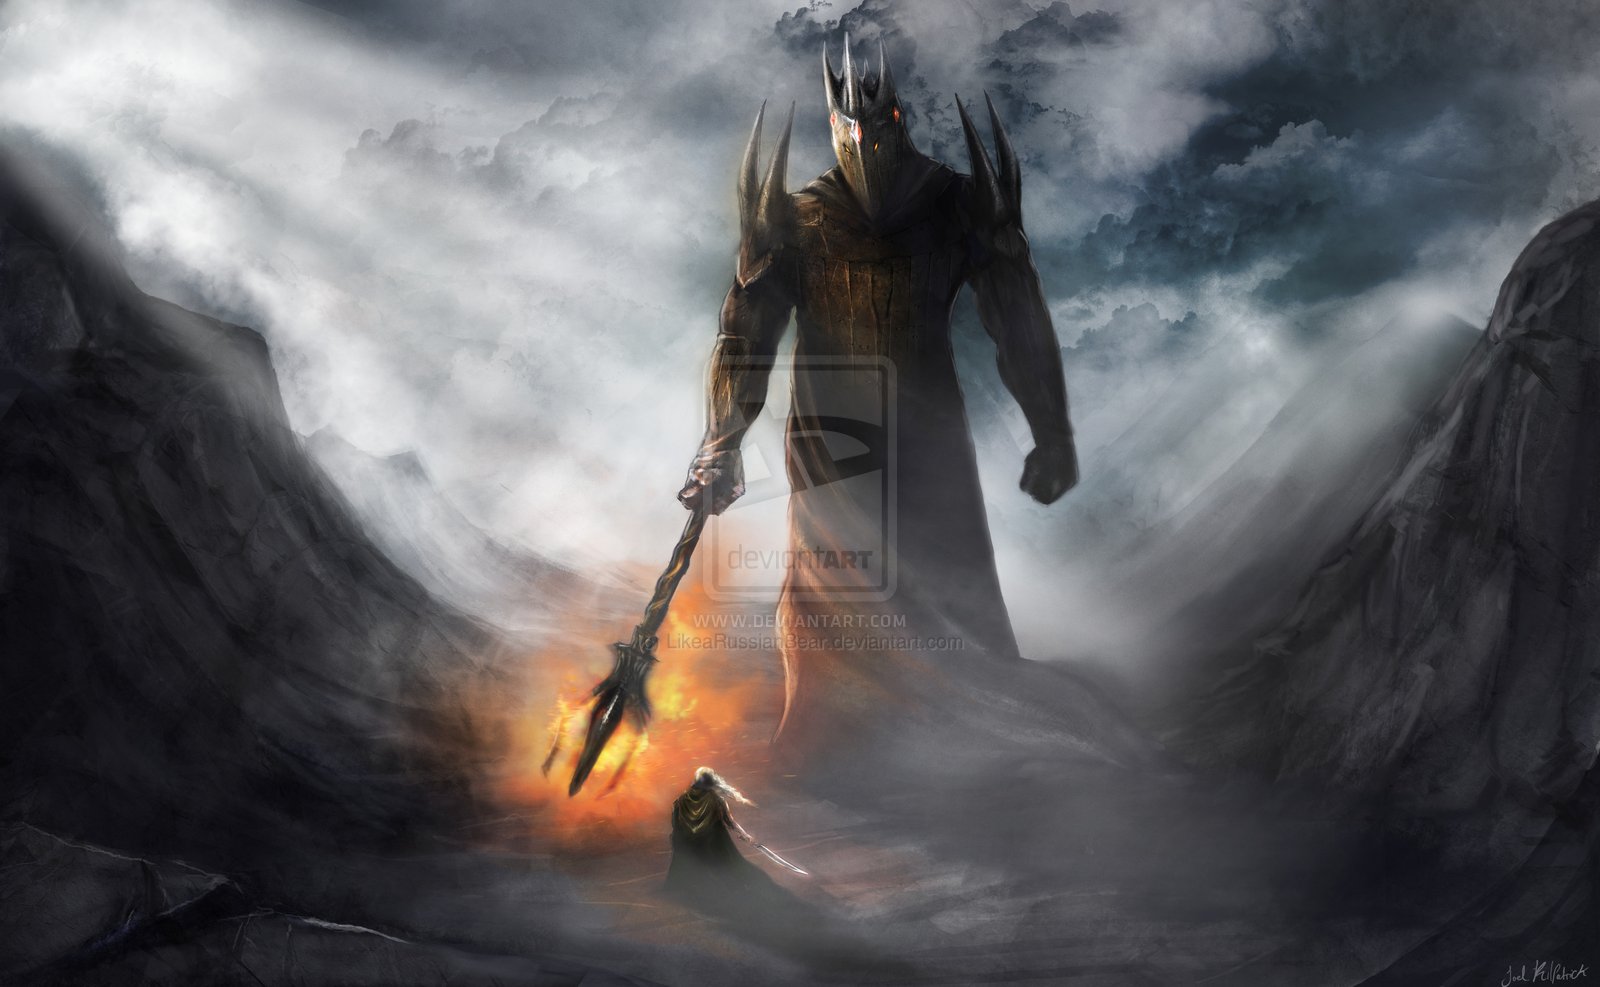  Fingolfin vs Morgoth